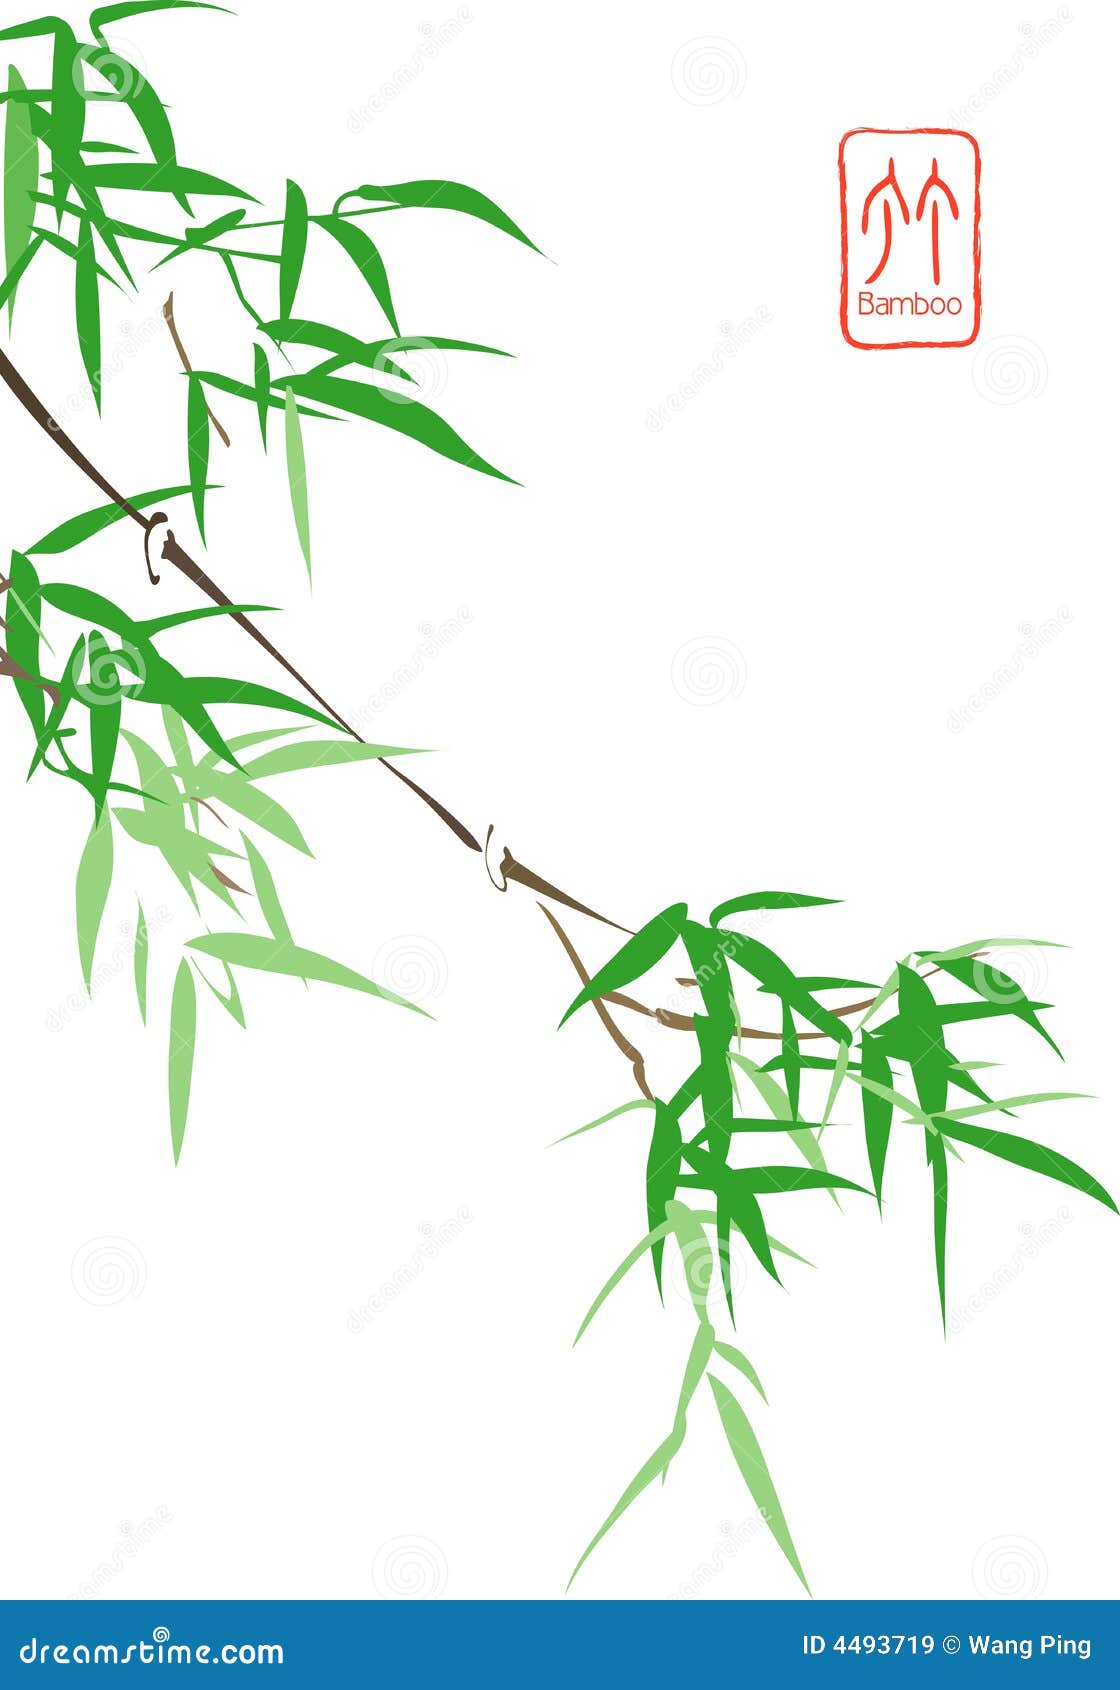 chinesischer bambus